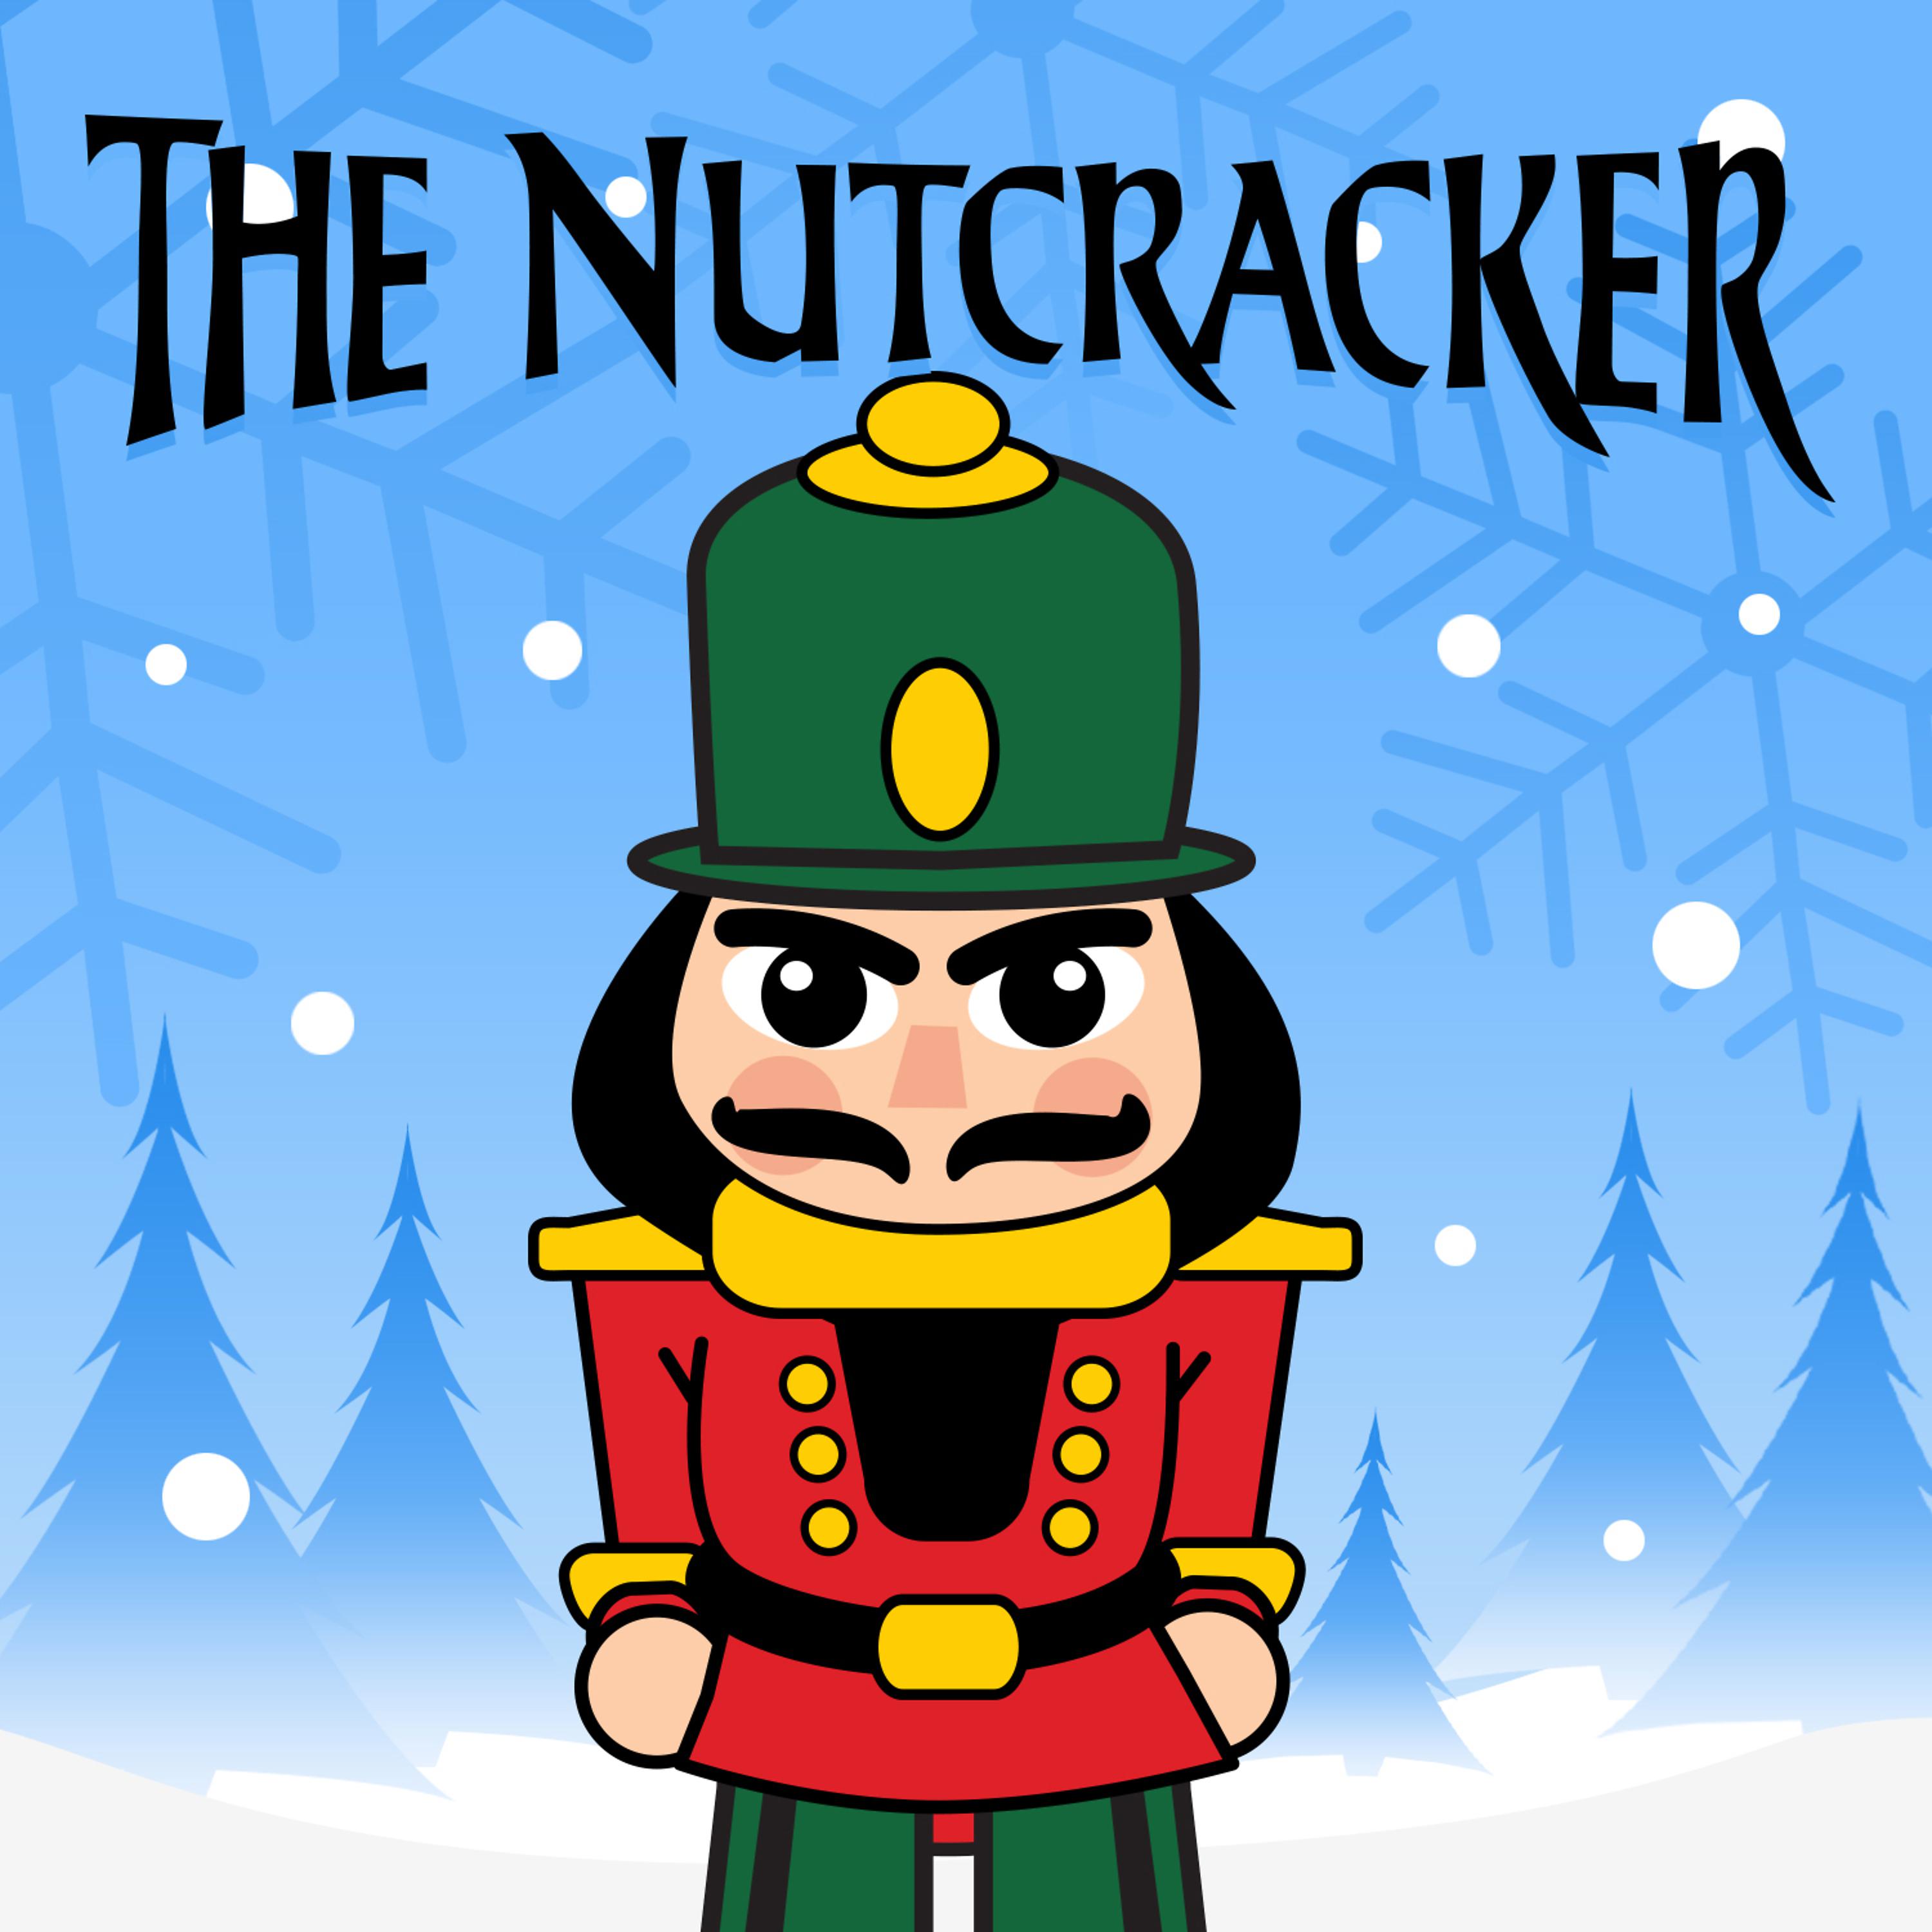 Постер альбома Tchaikovsky: The Nutcracker Suite